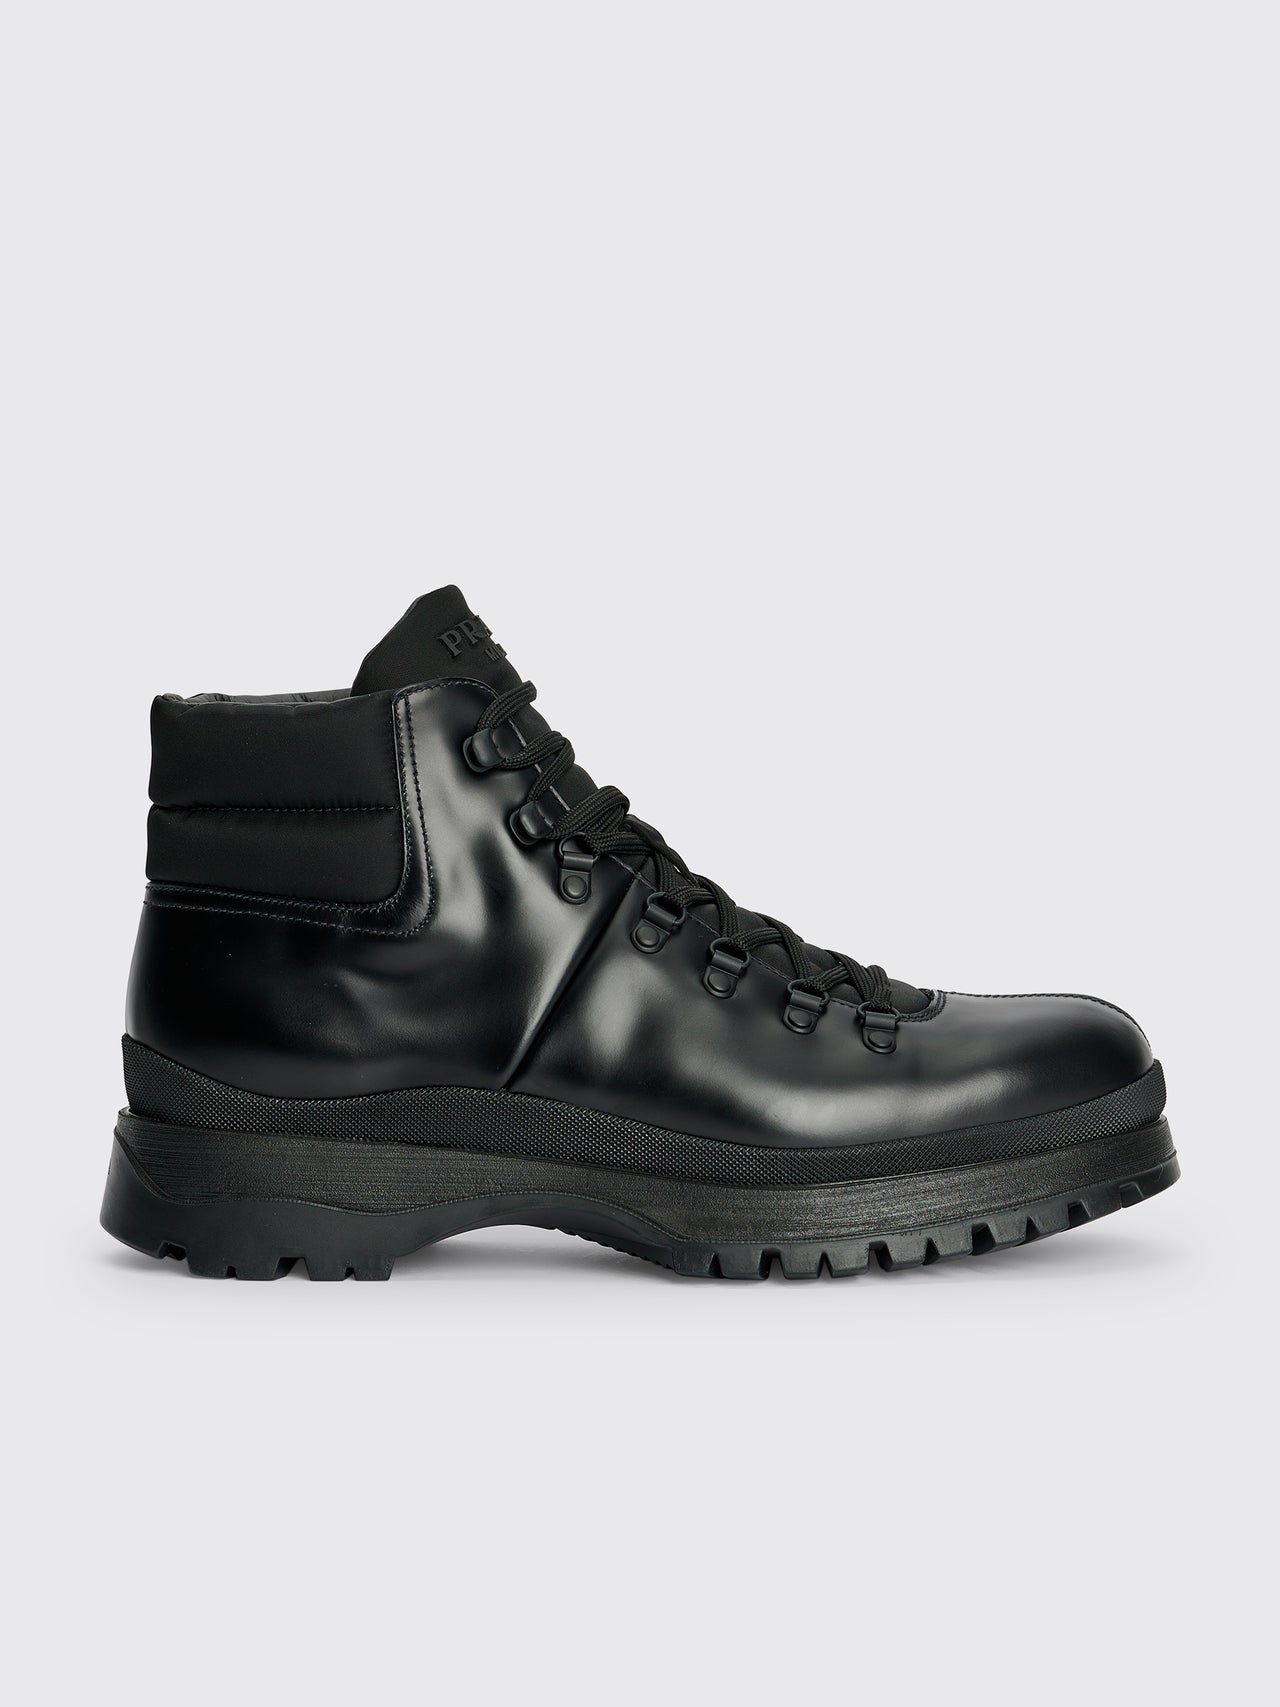 Prada Brixxen Leather Boots Black